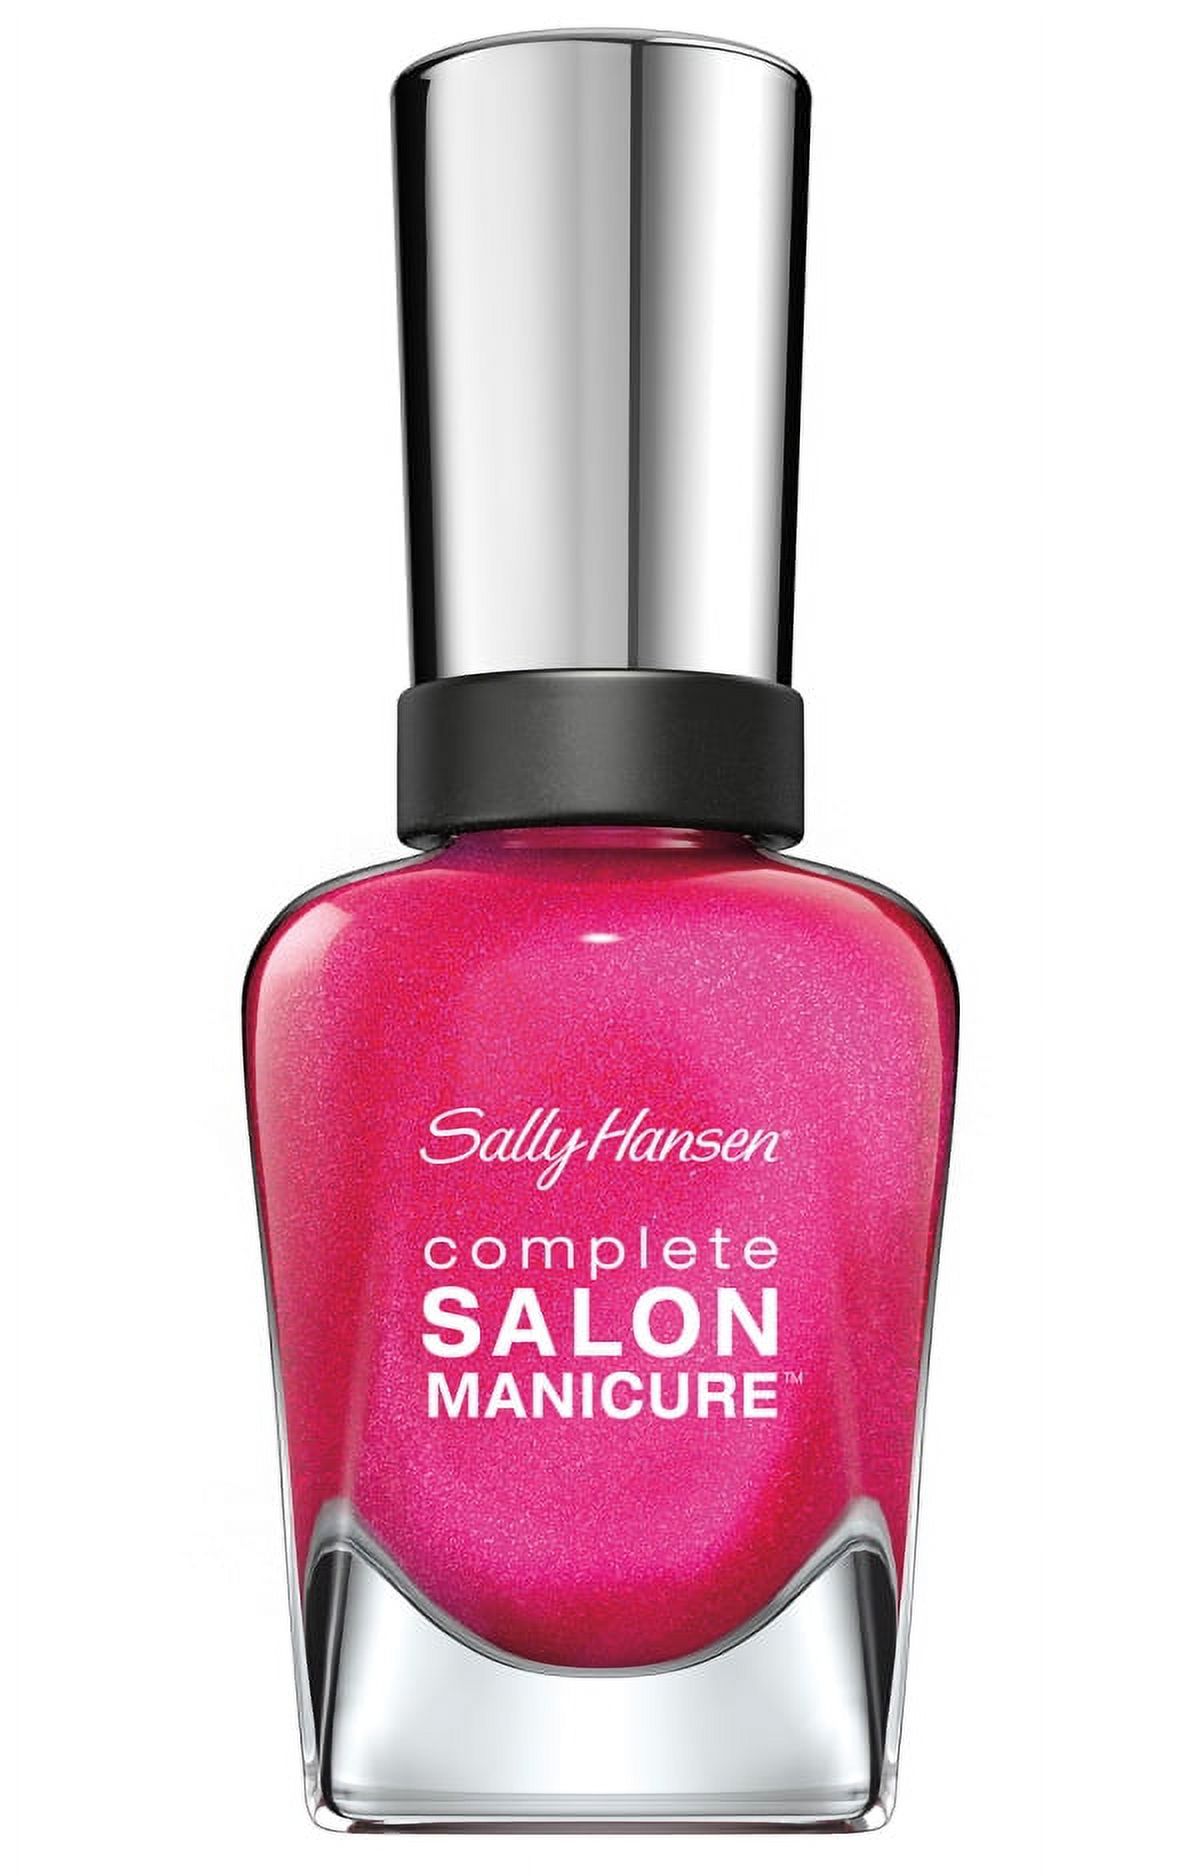 Sally Hansen Complete Salon Manicure Nail Polish, Back To The Fuchsia - image 1 of 4